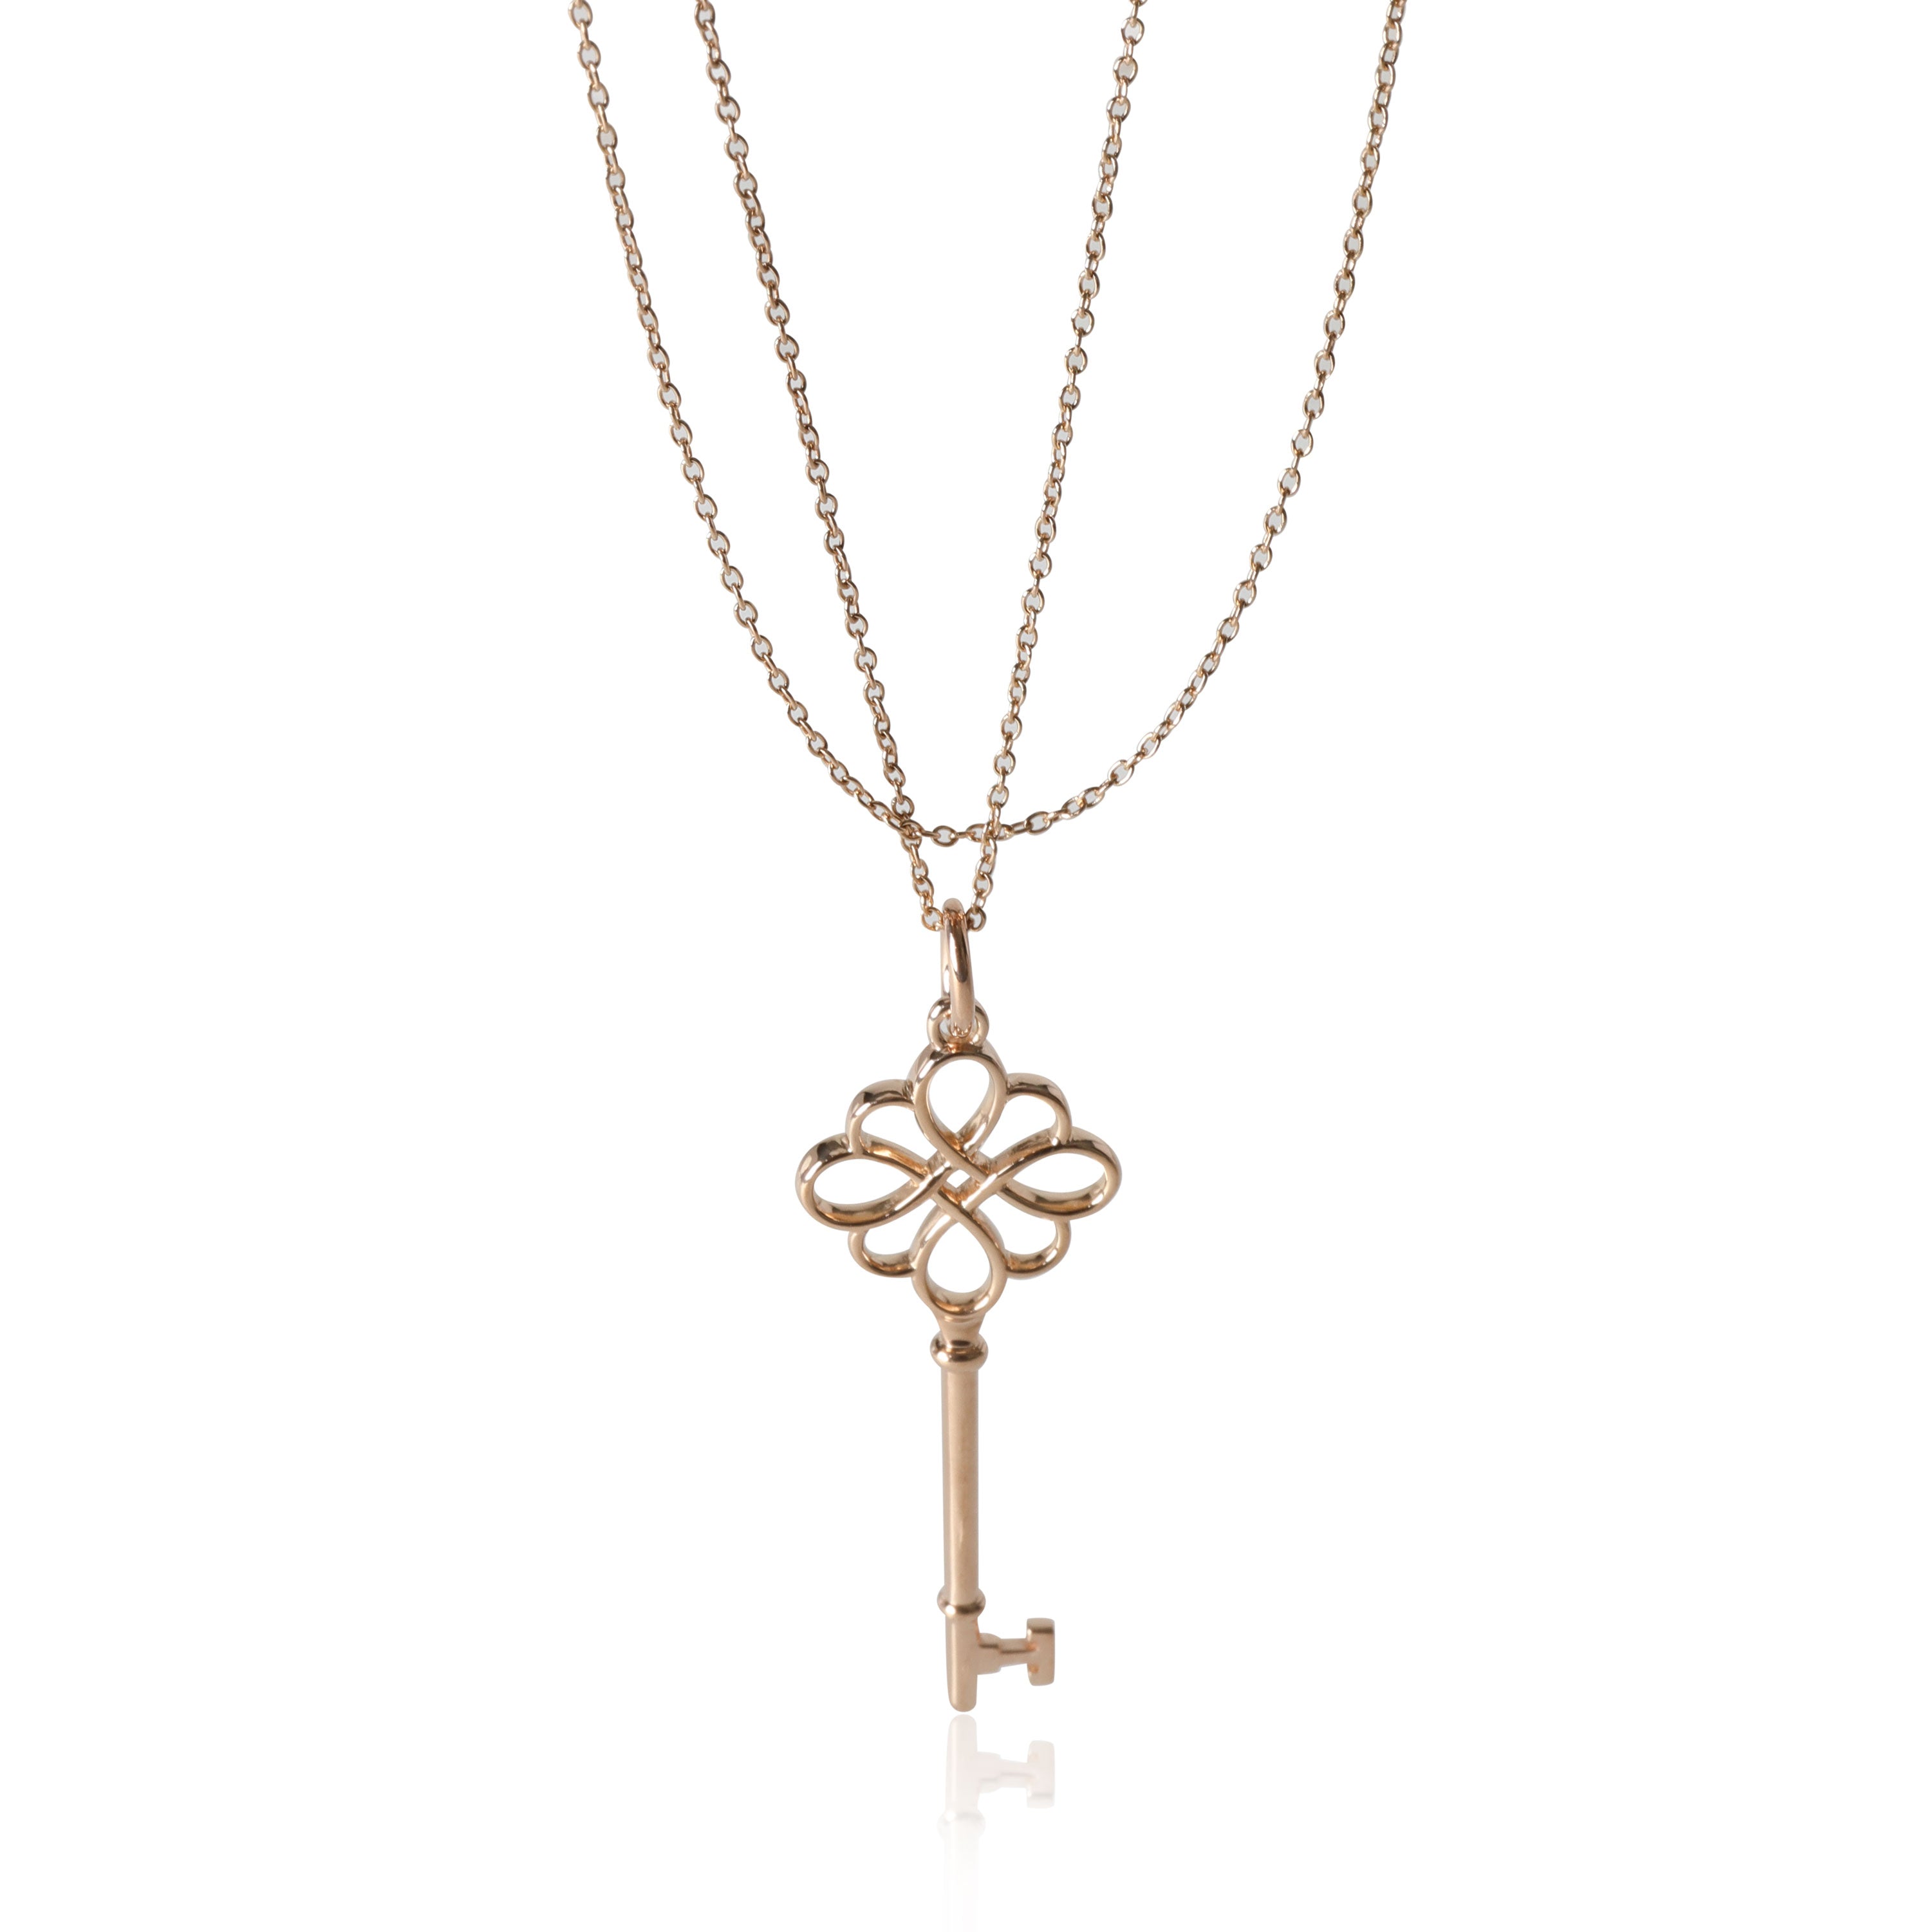 Tiffany Keys knot key pendant in 18k white gold with diamonds on a